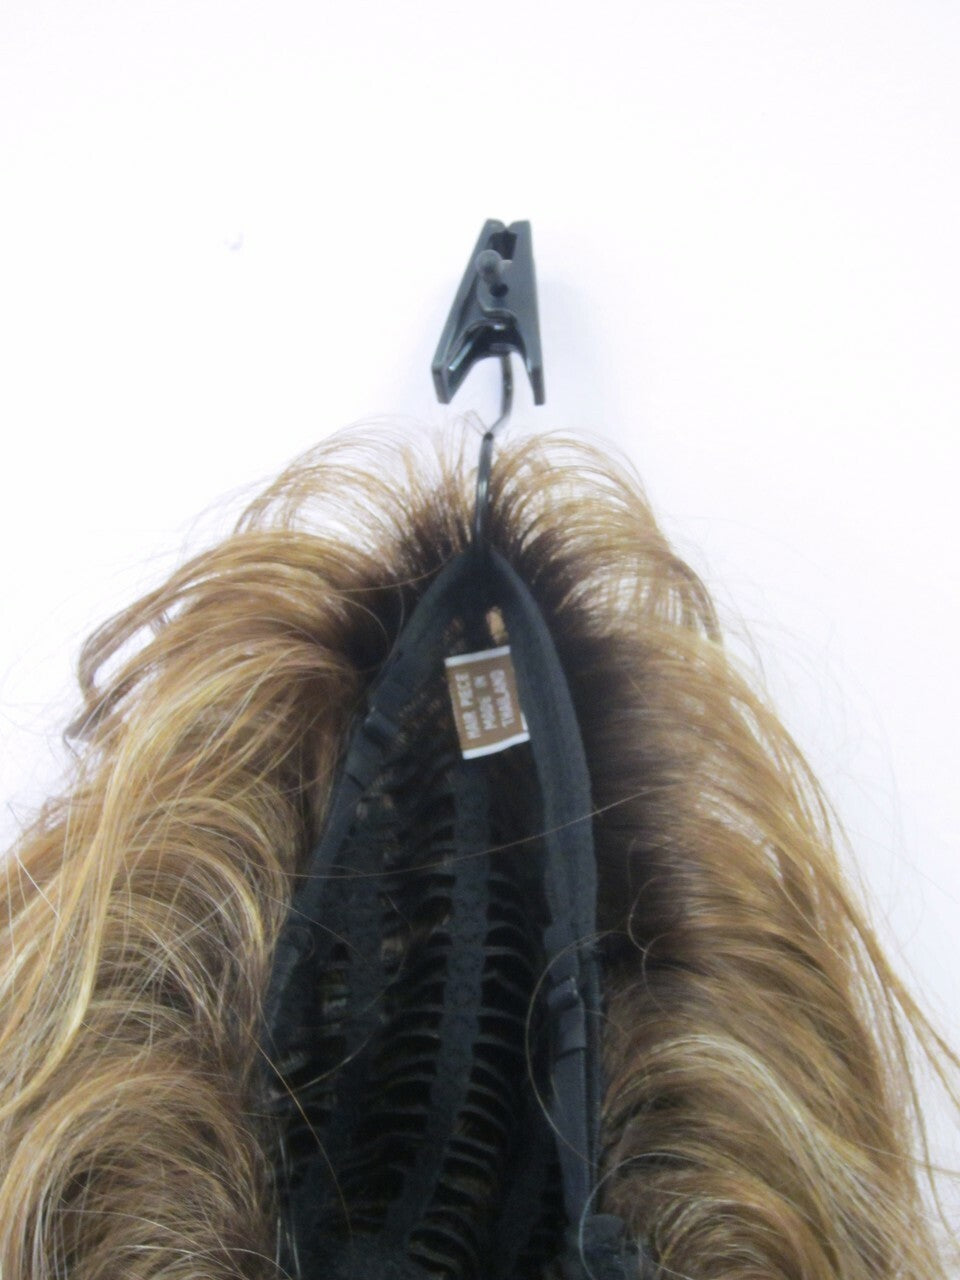 Wig Hanger